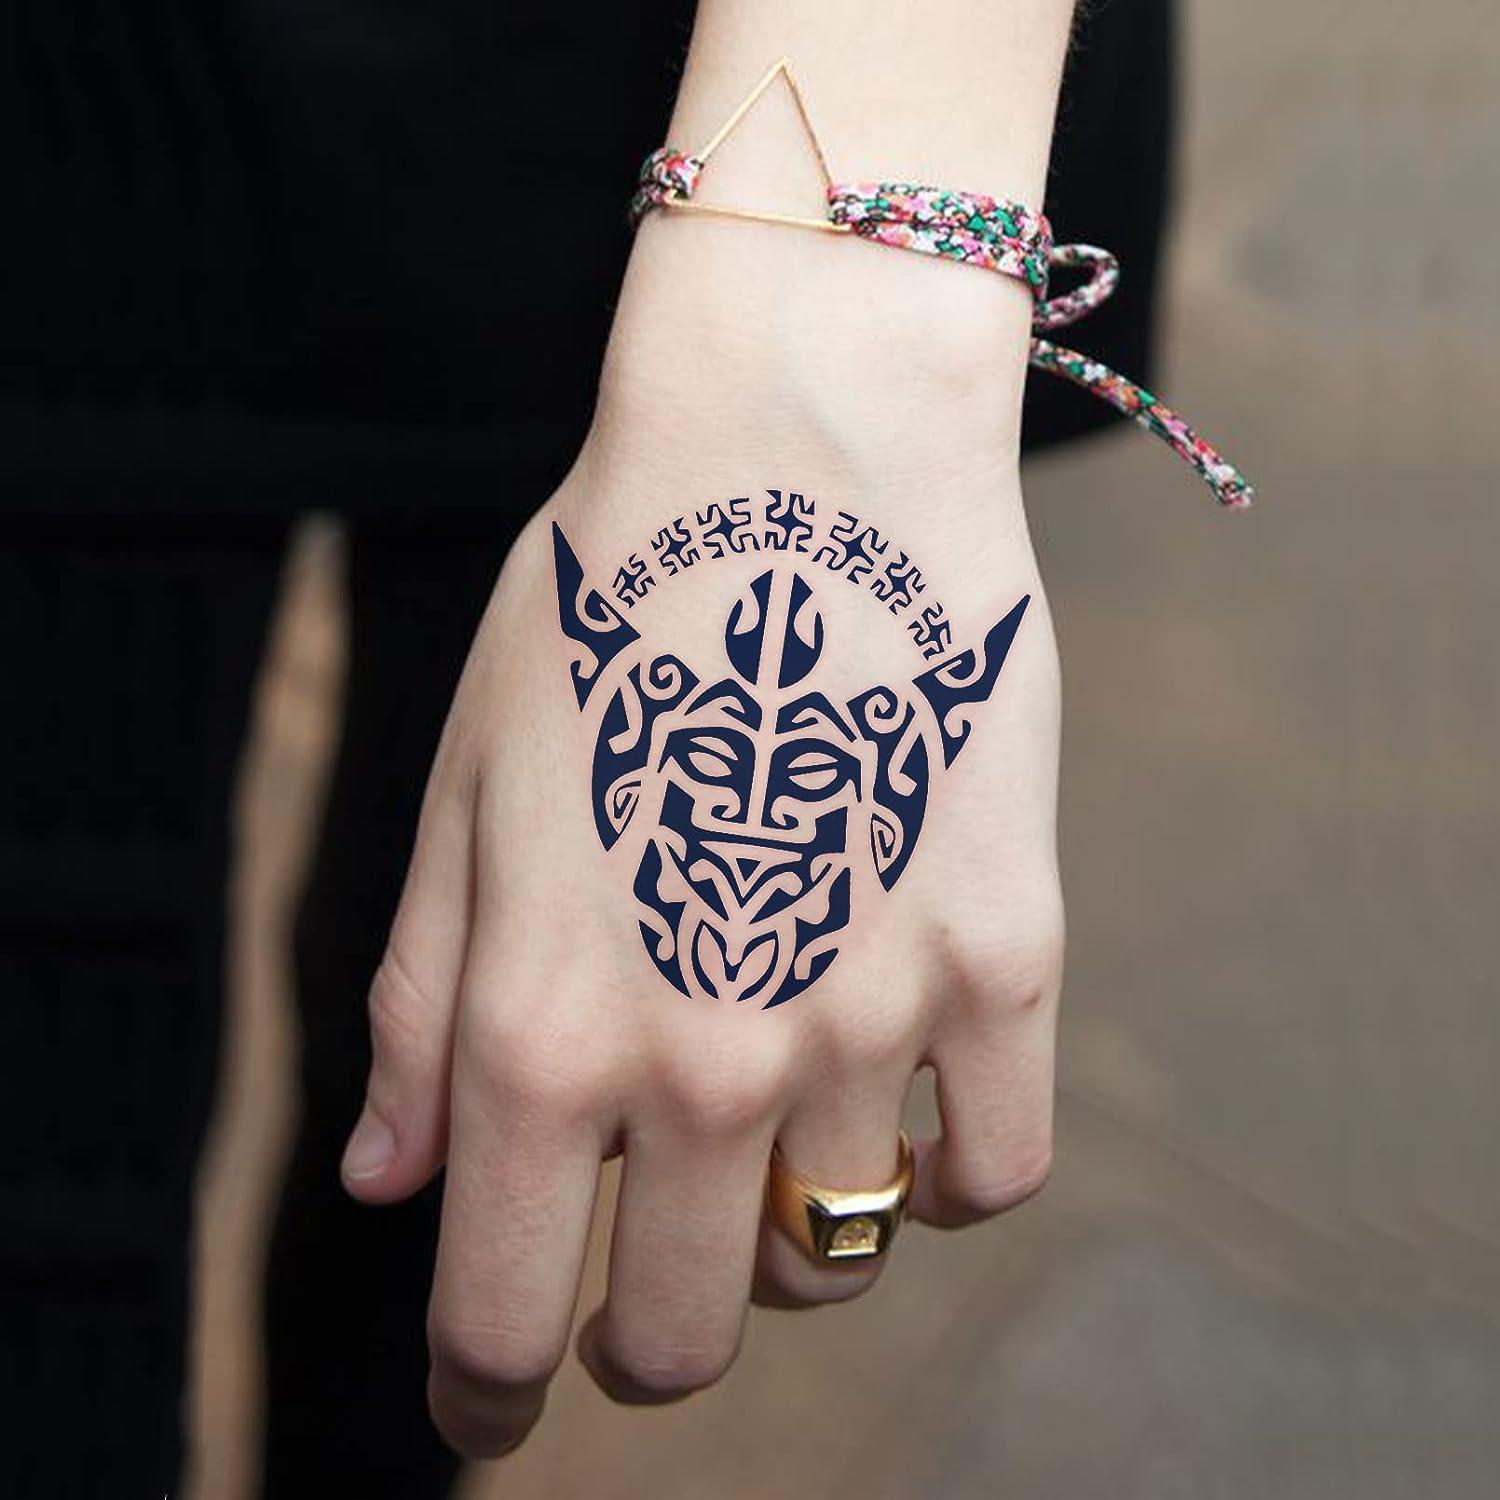 Black Strocks Tattoos - Forearm#band#Roman#numeric#tattoo#  @black_strocks_tattoos #Chalalukdy | Facebook